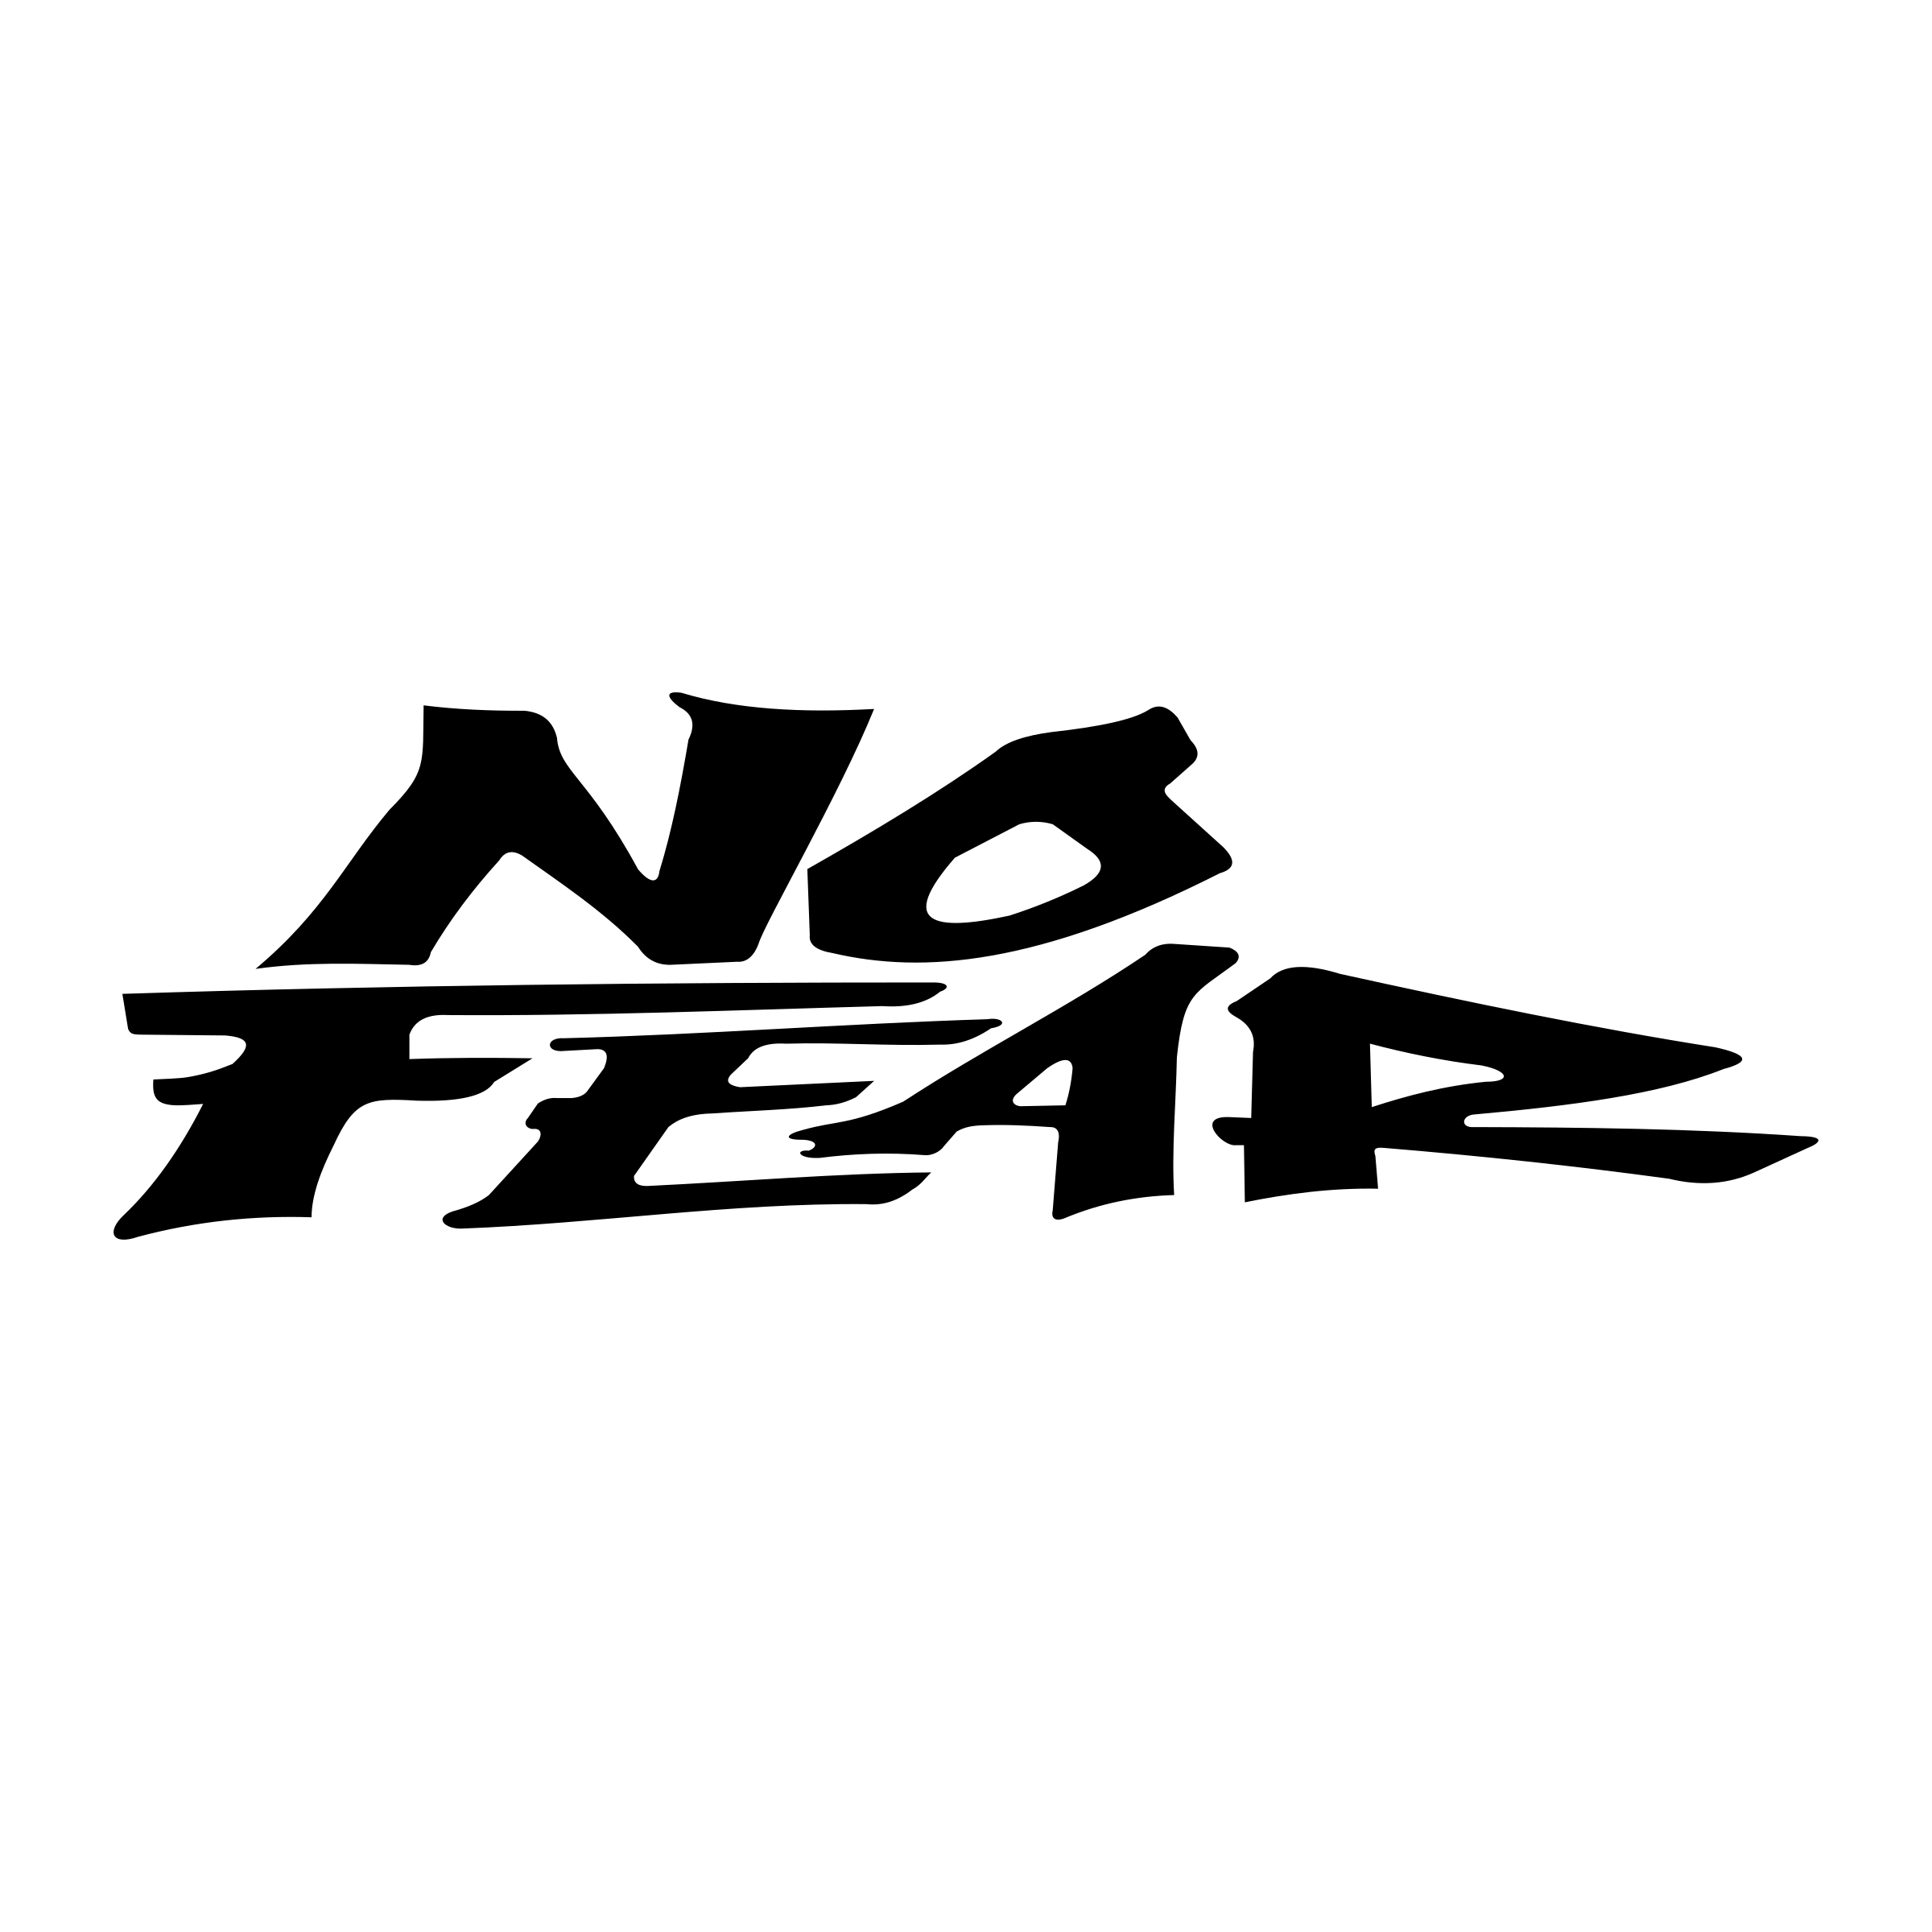 Fear Logo - No Fear Logo PNG Transparent & SVG Vector - Freebie Supply